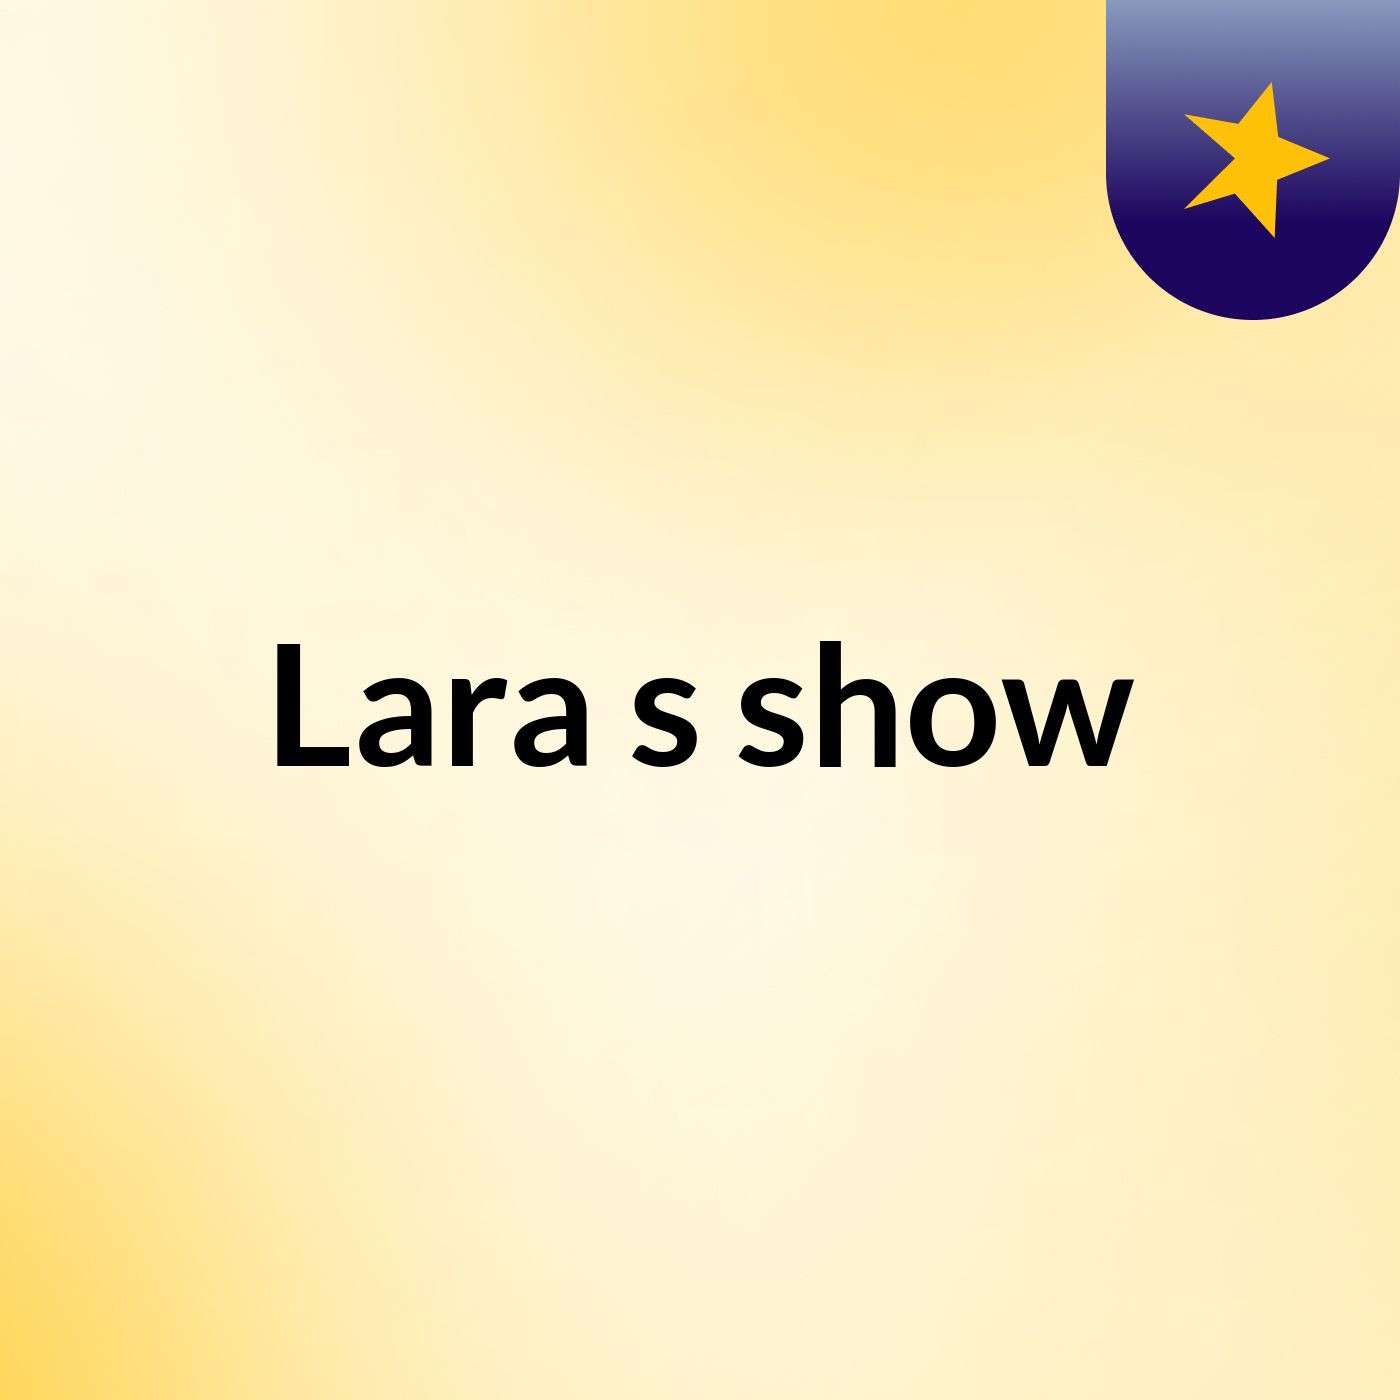 Lara's show